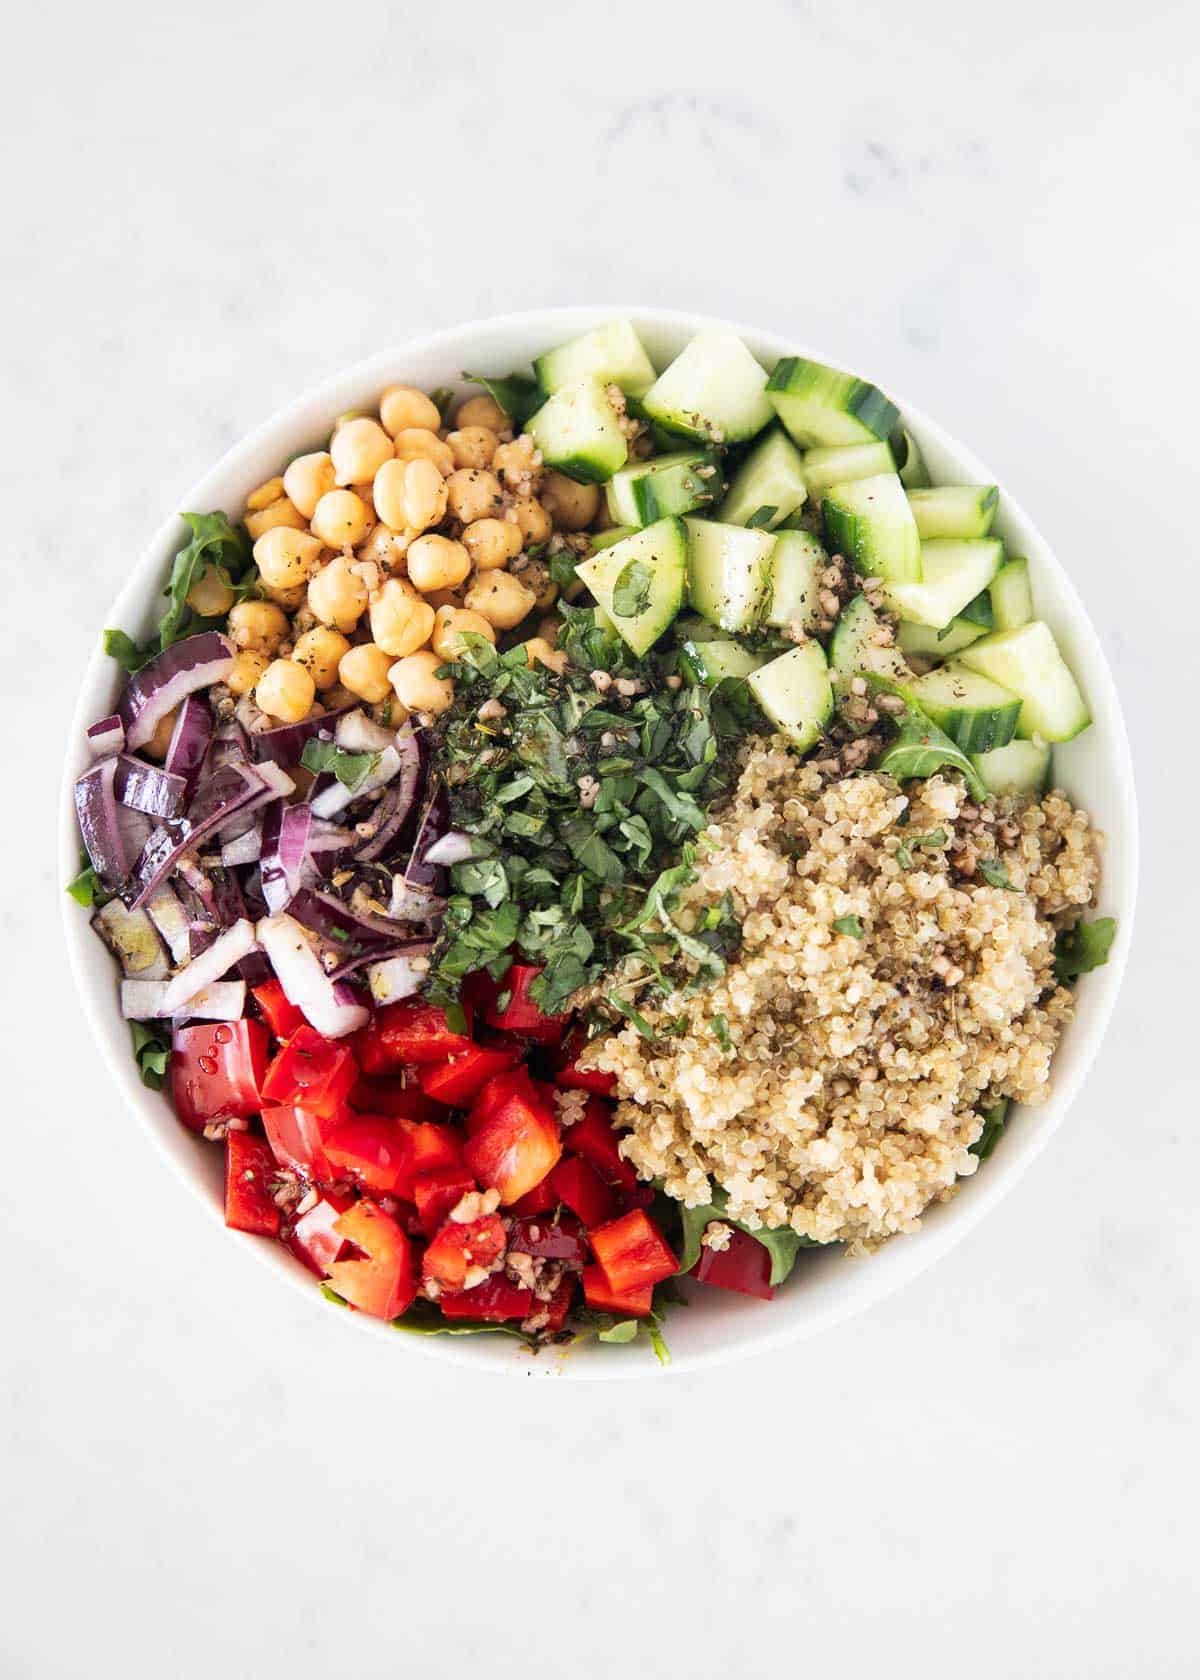 Quinoa mediterranean salad ingredients in bowl.